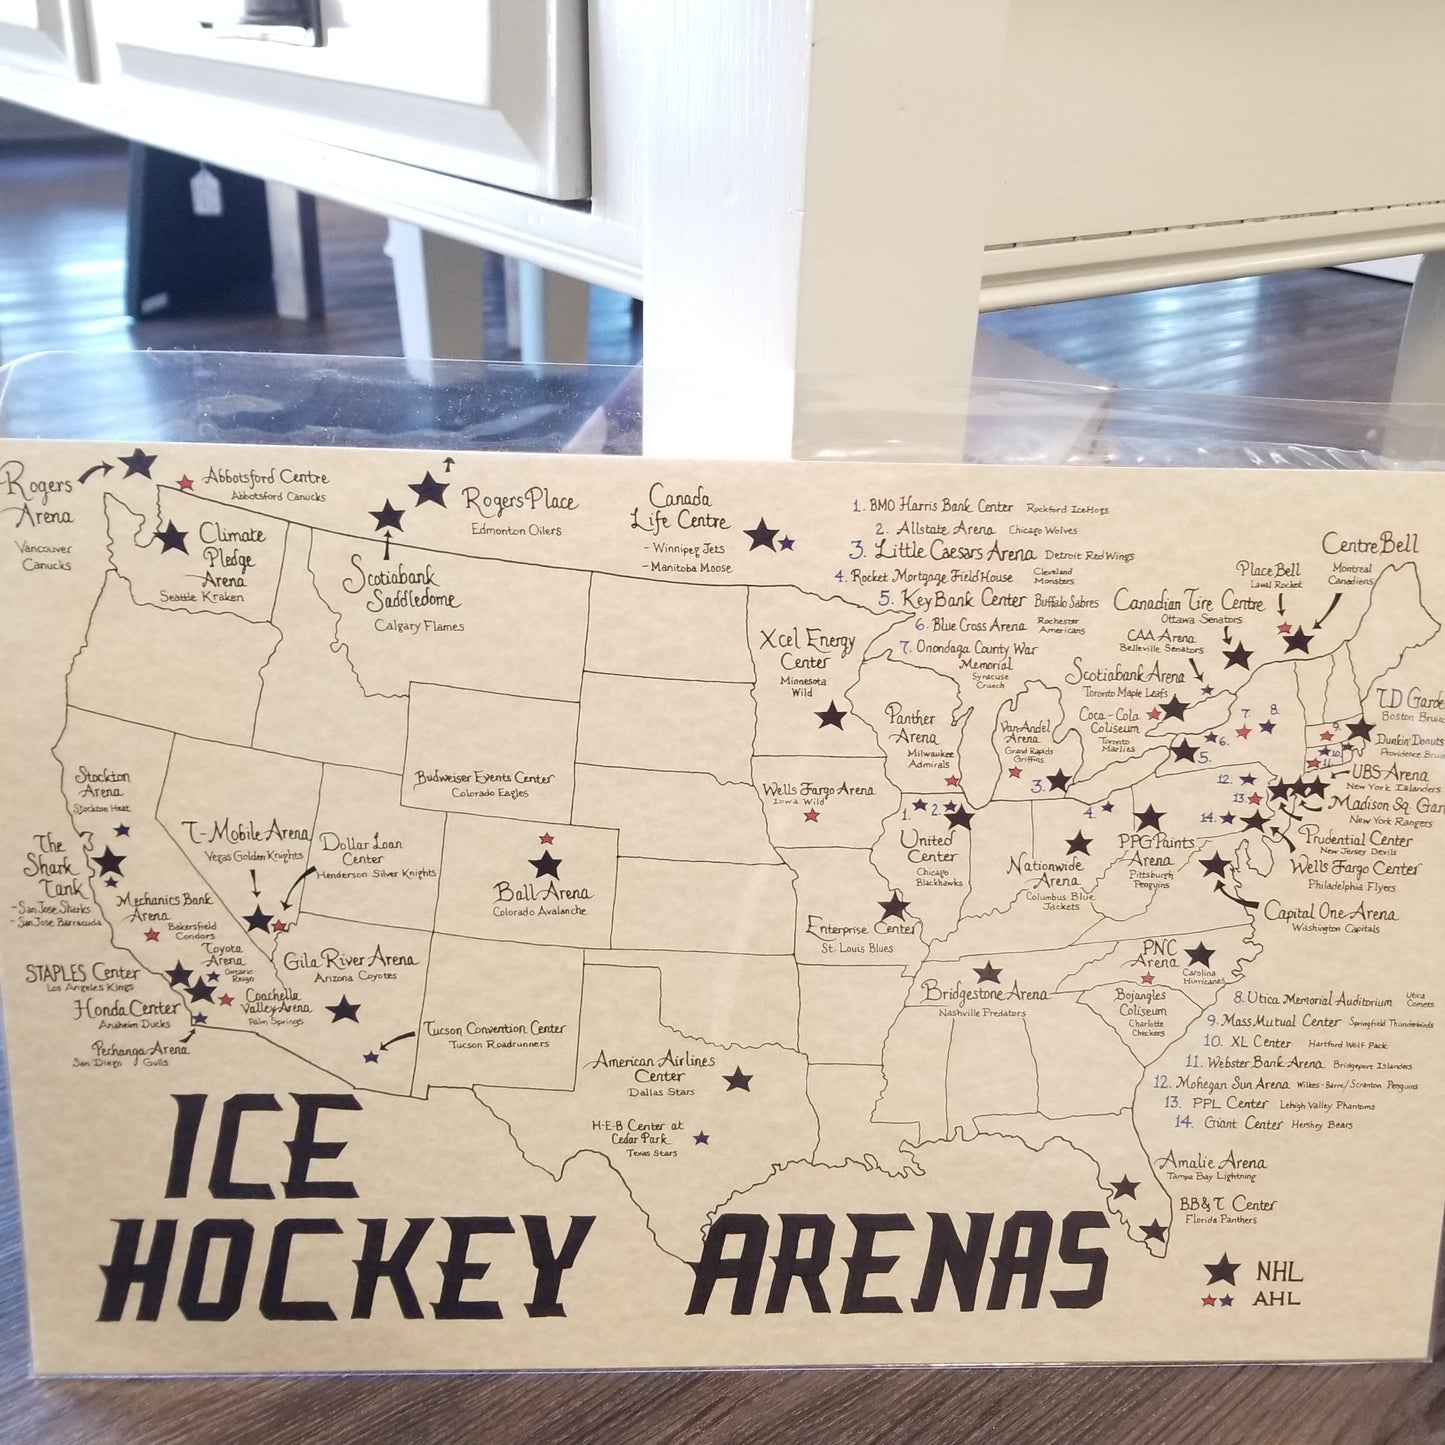 NHL and AHL USA ice hockey map